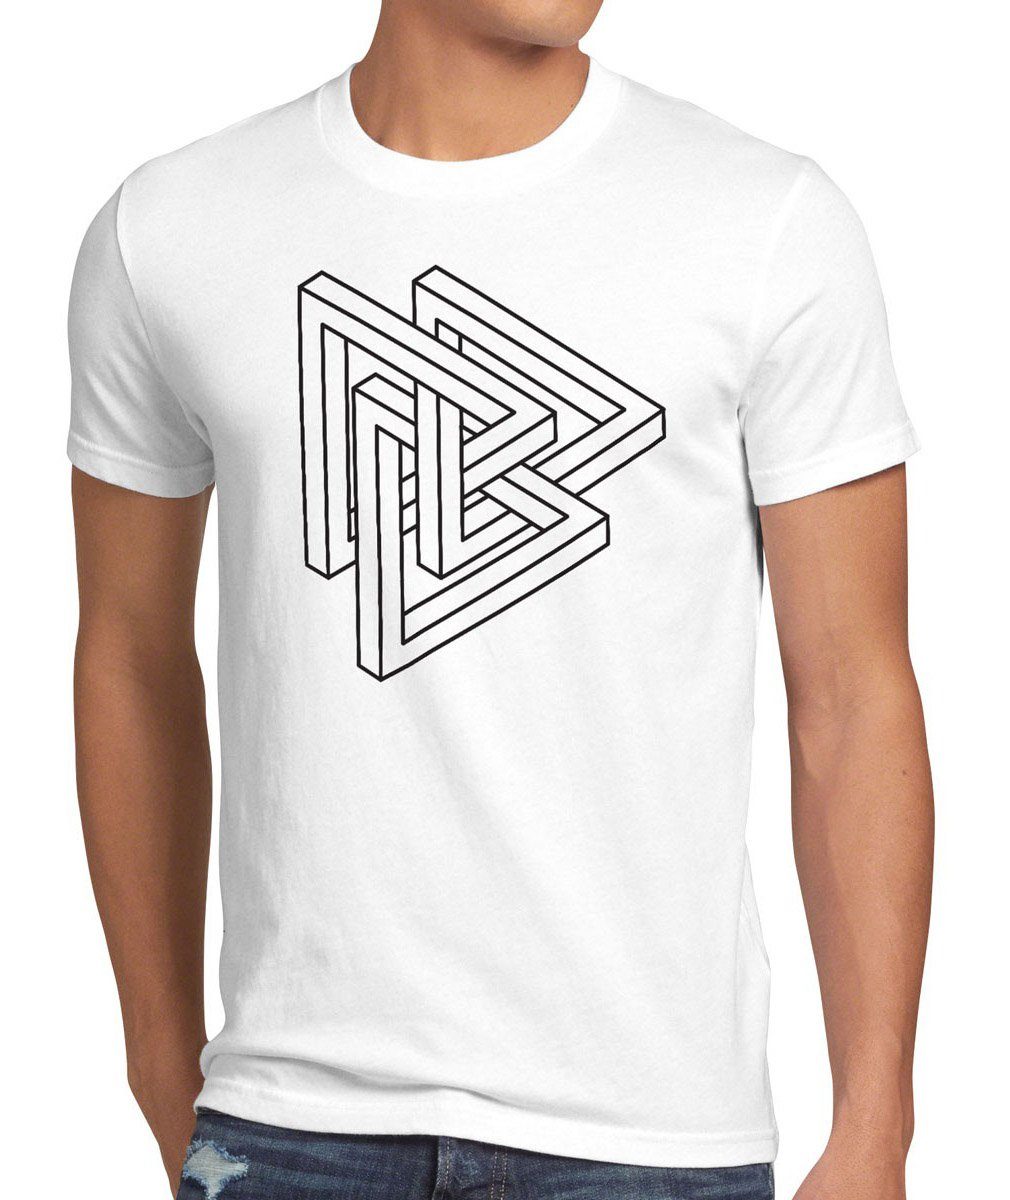 style3 Print-Shirt Herren T-Shirt Penrose Big Bang Sheldon Escher Cooper Dreieck Würfel Theory geo weiß